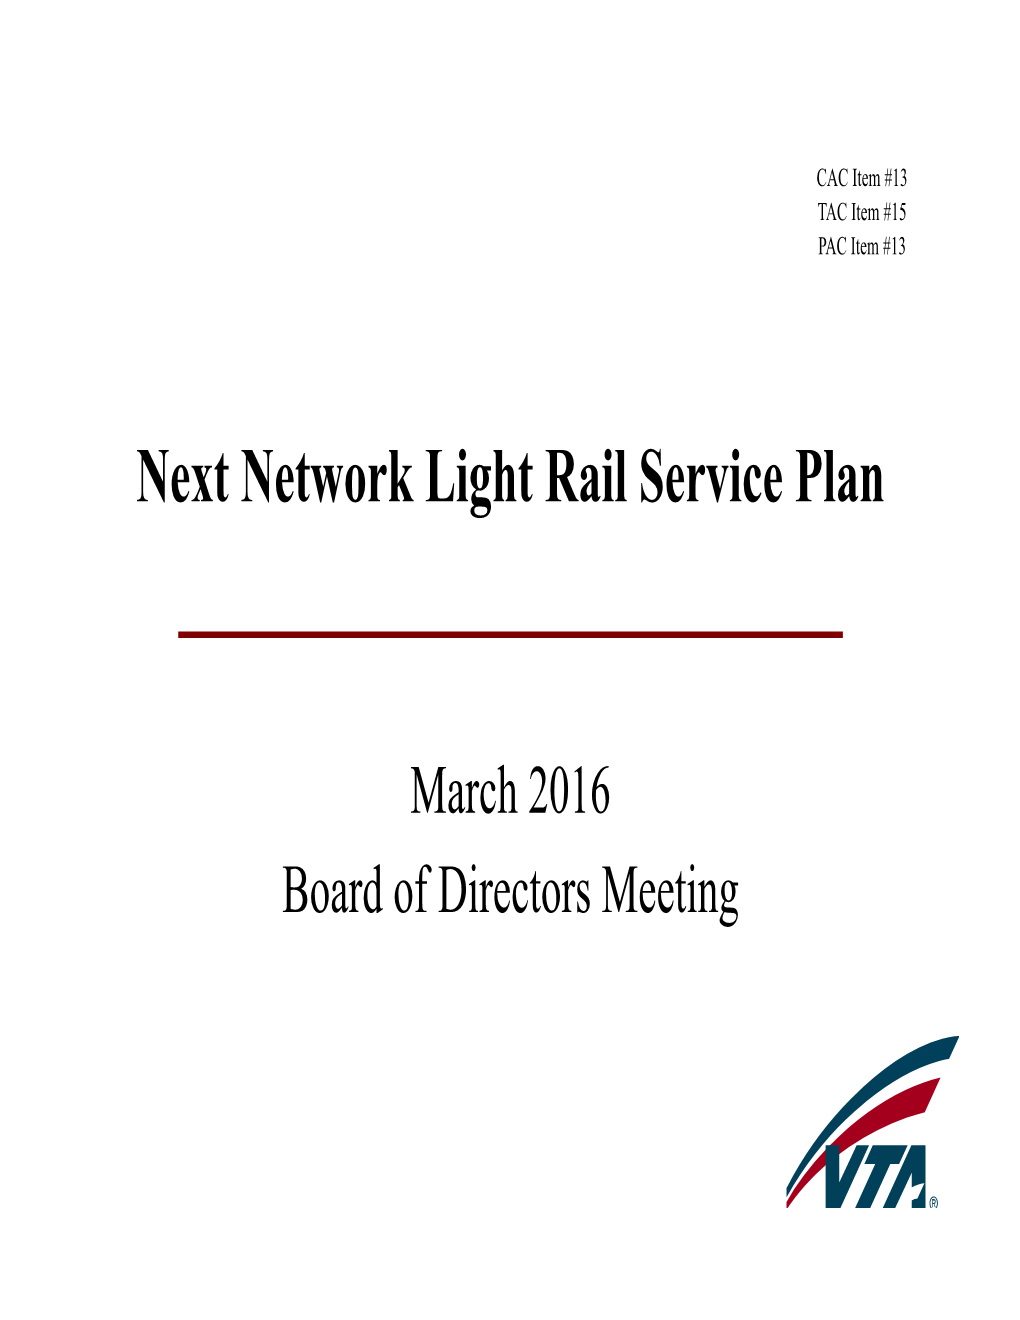 Next Network Light Rail Service Plan